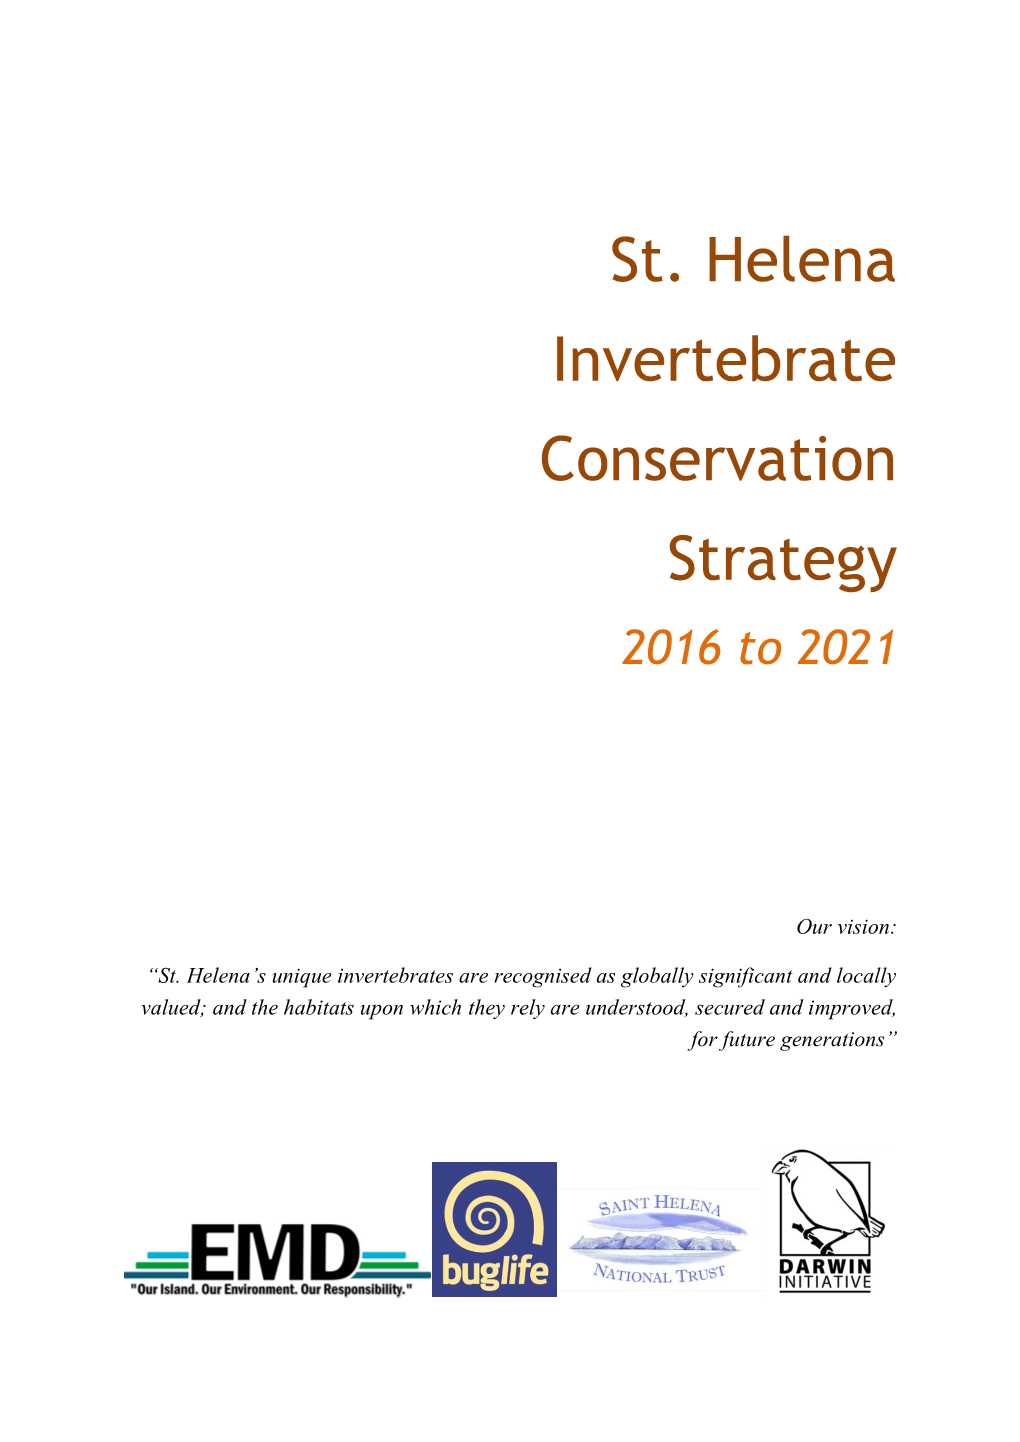 St. Helena Invertebrate Conservation Strategy 2016 to 2021